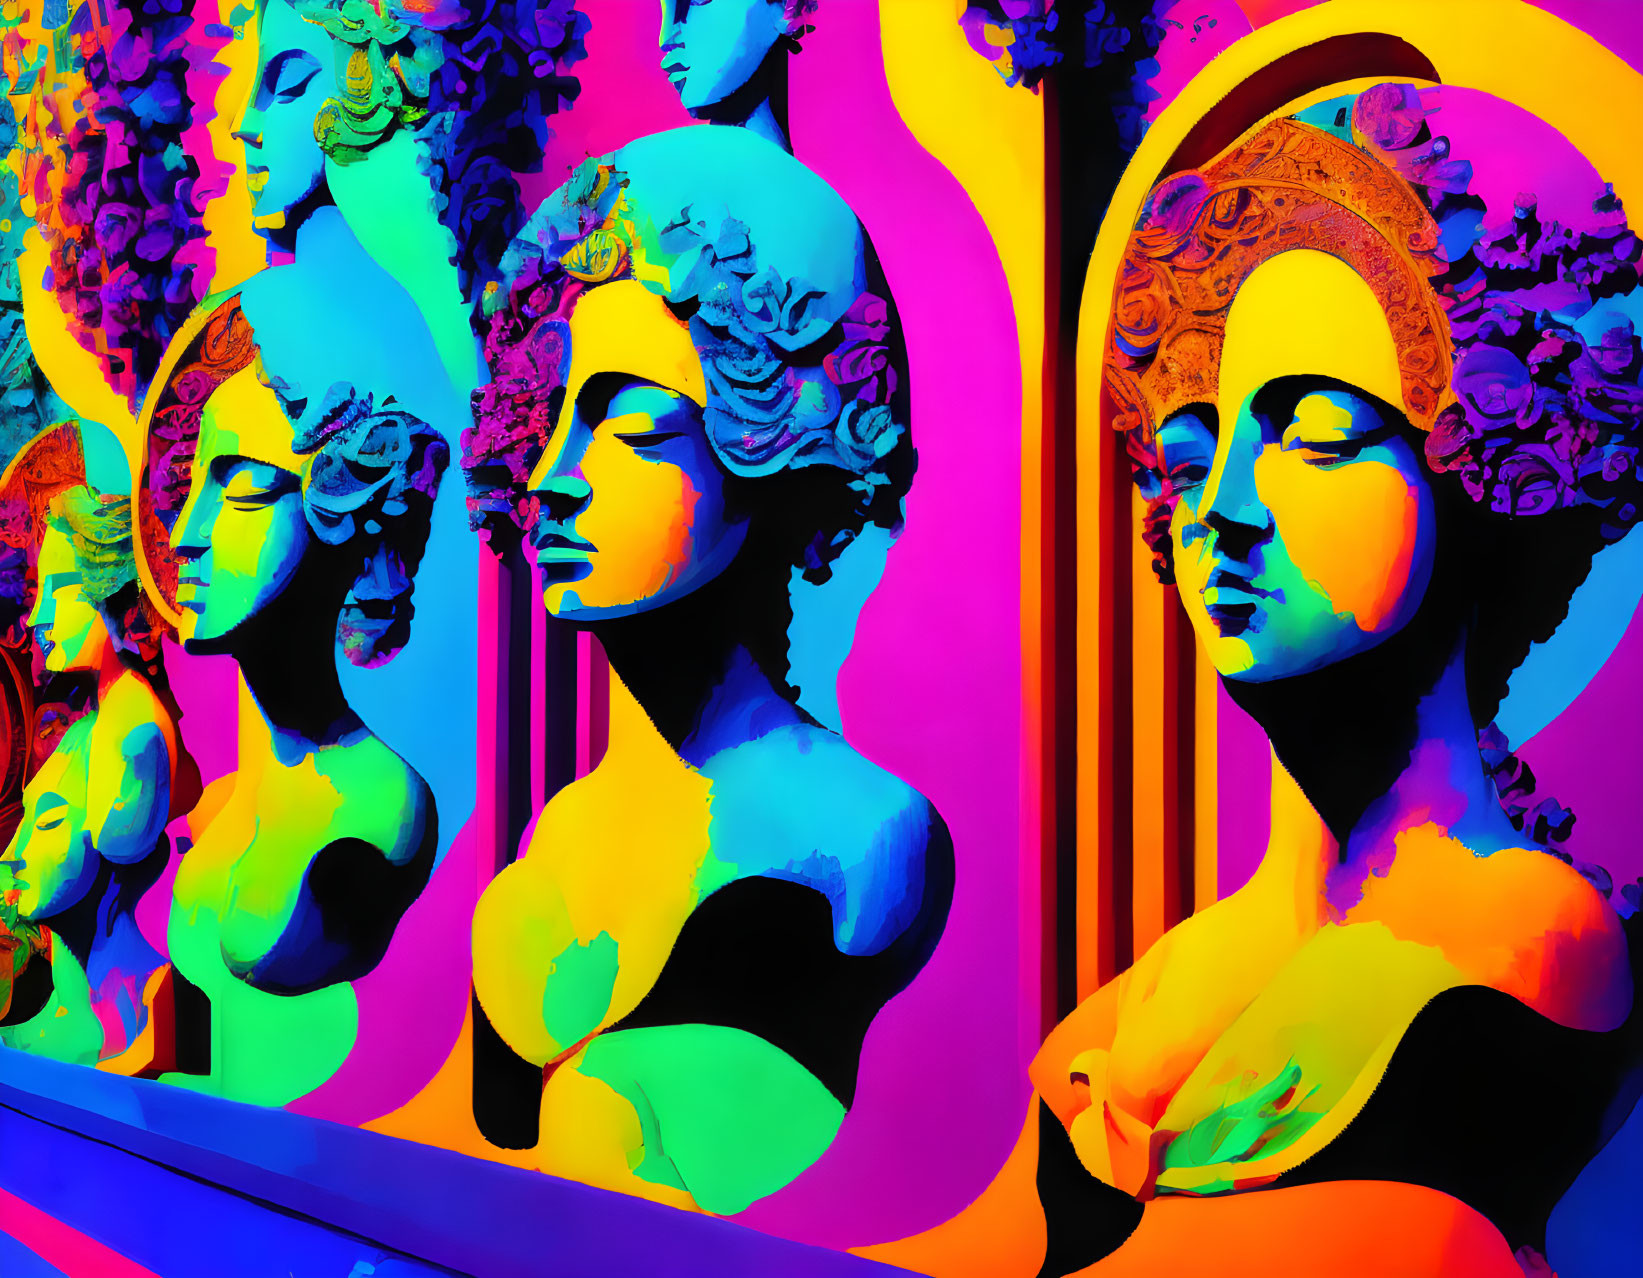 Multicolored Digital Art of Repeated Classical Sculptures